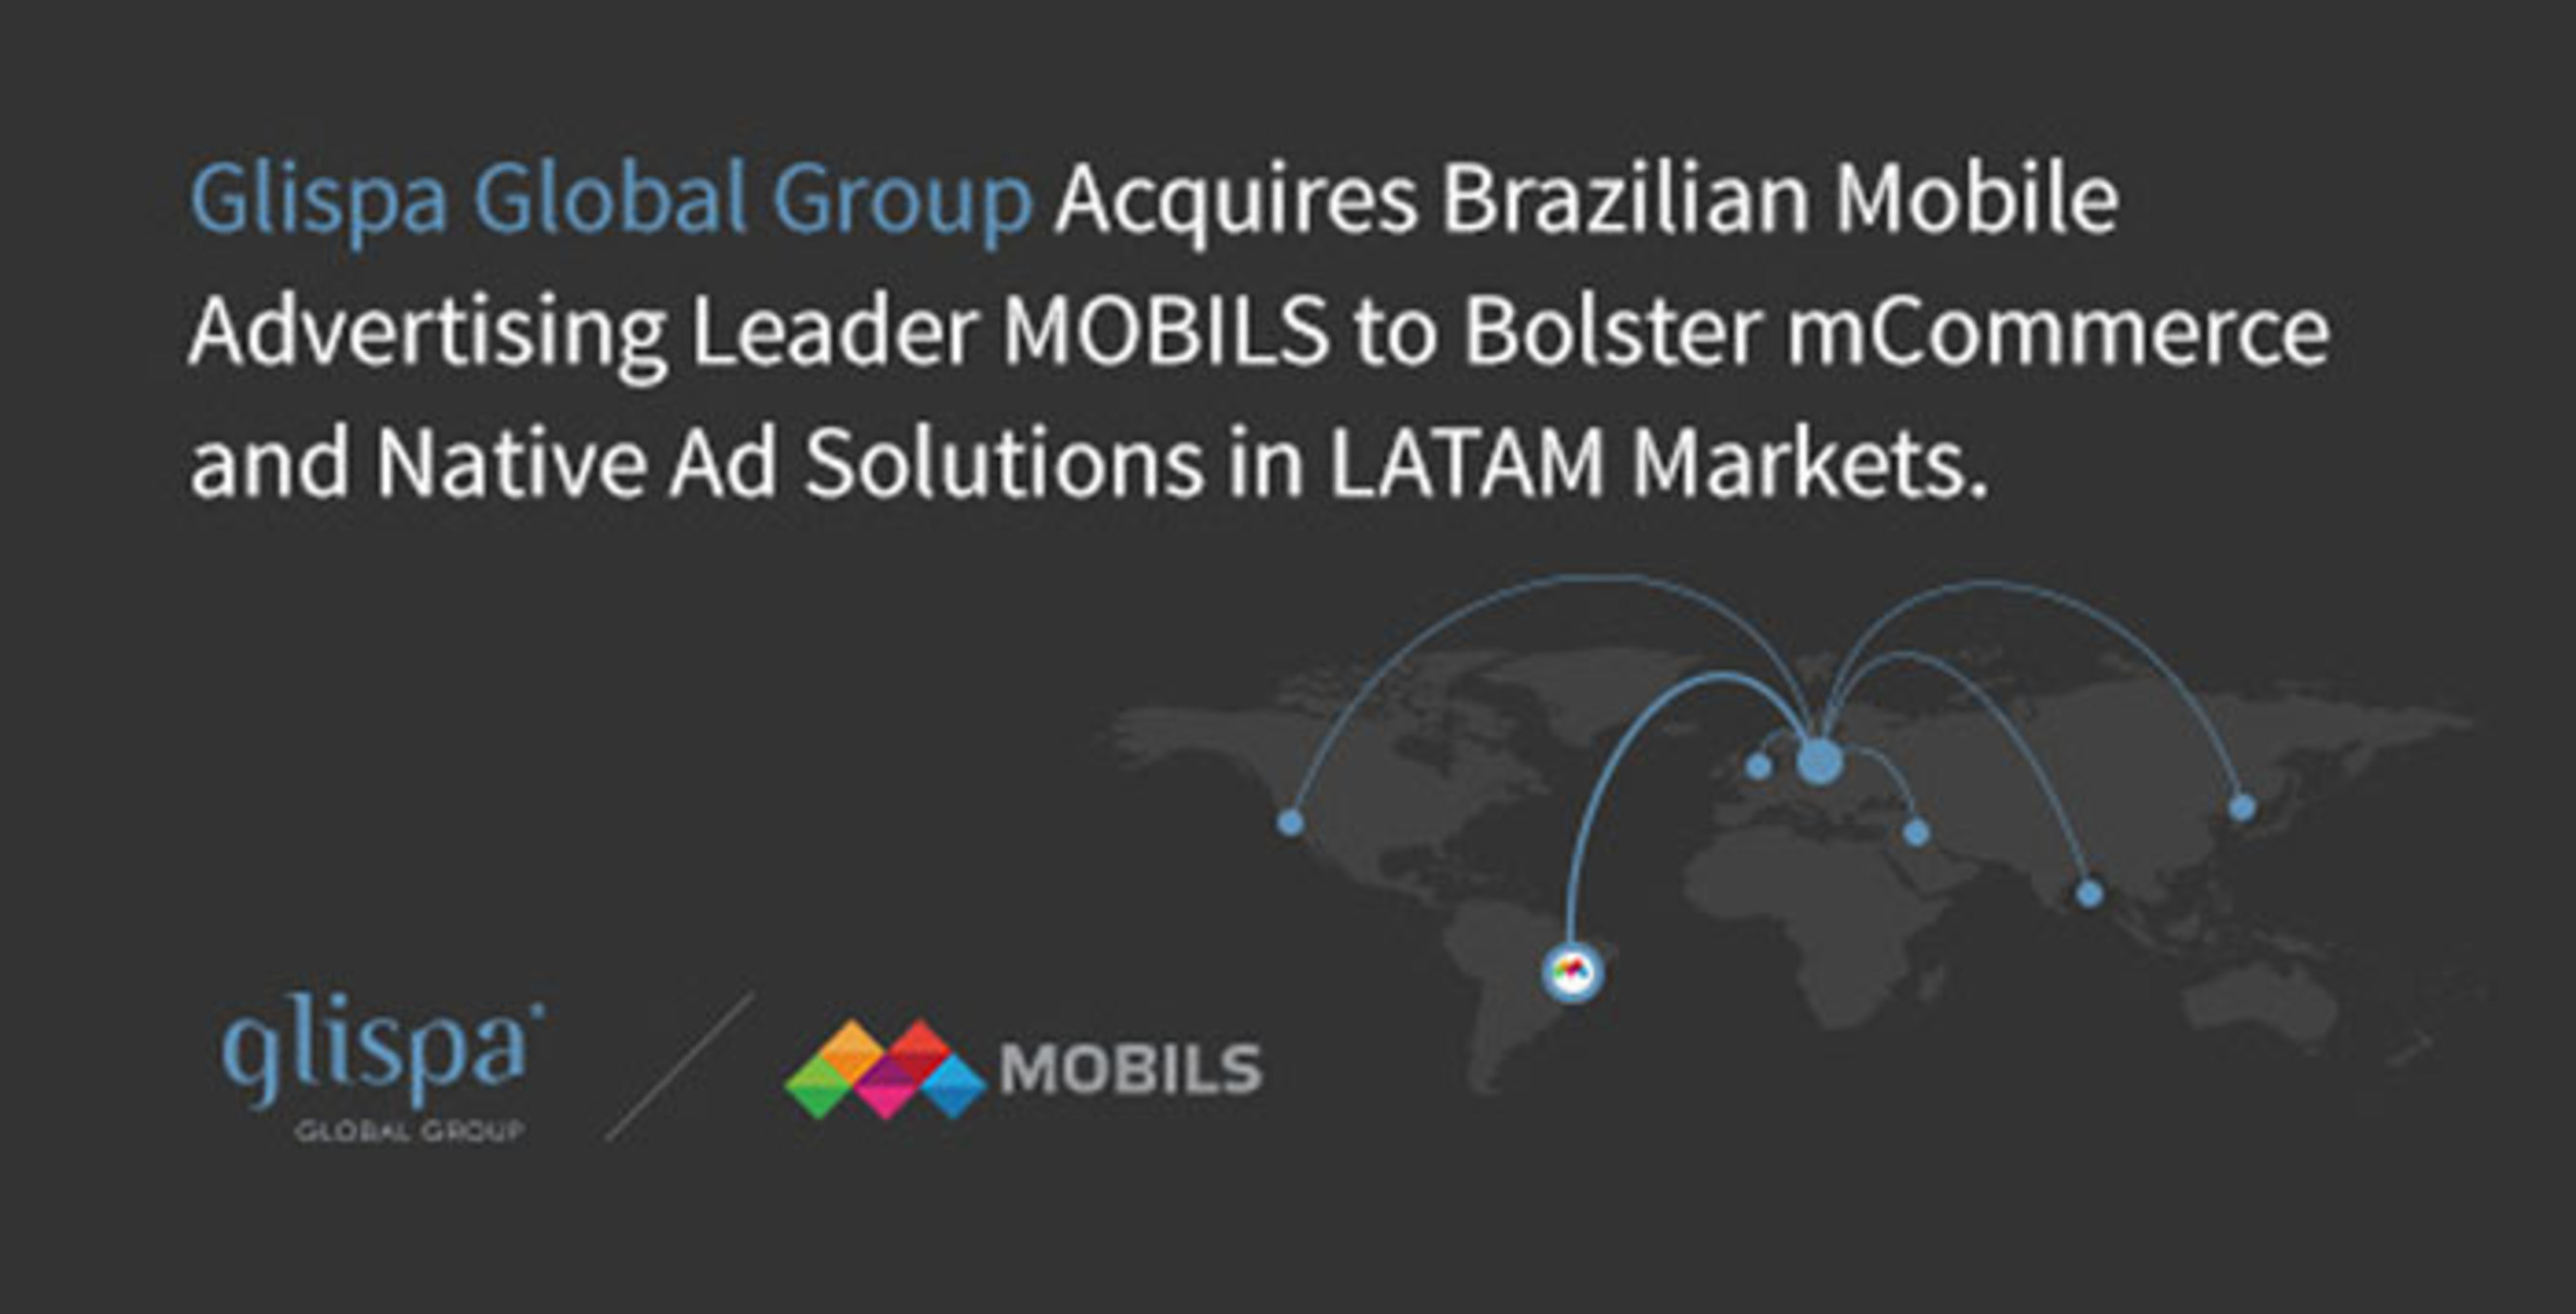 Glispa Global Group Acquires Brazilian Mobile Advertising Leader MOBILS